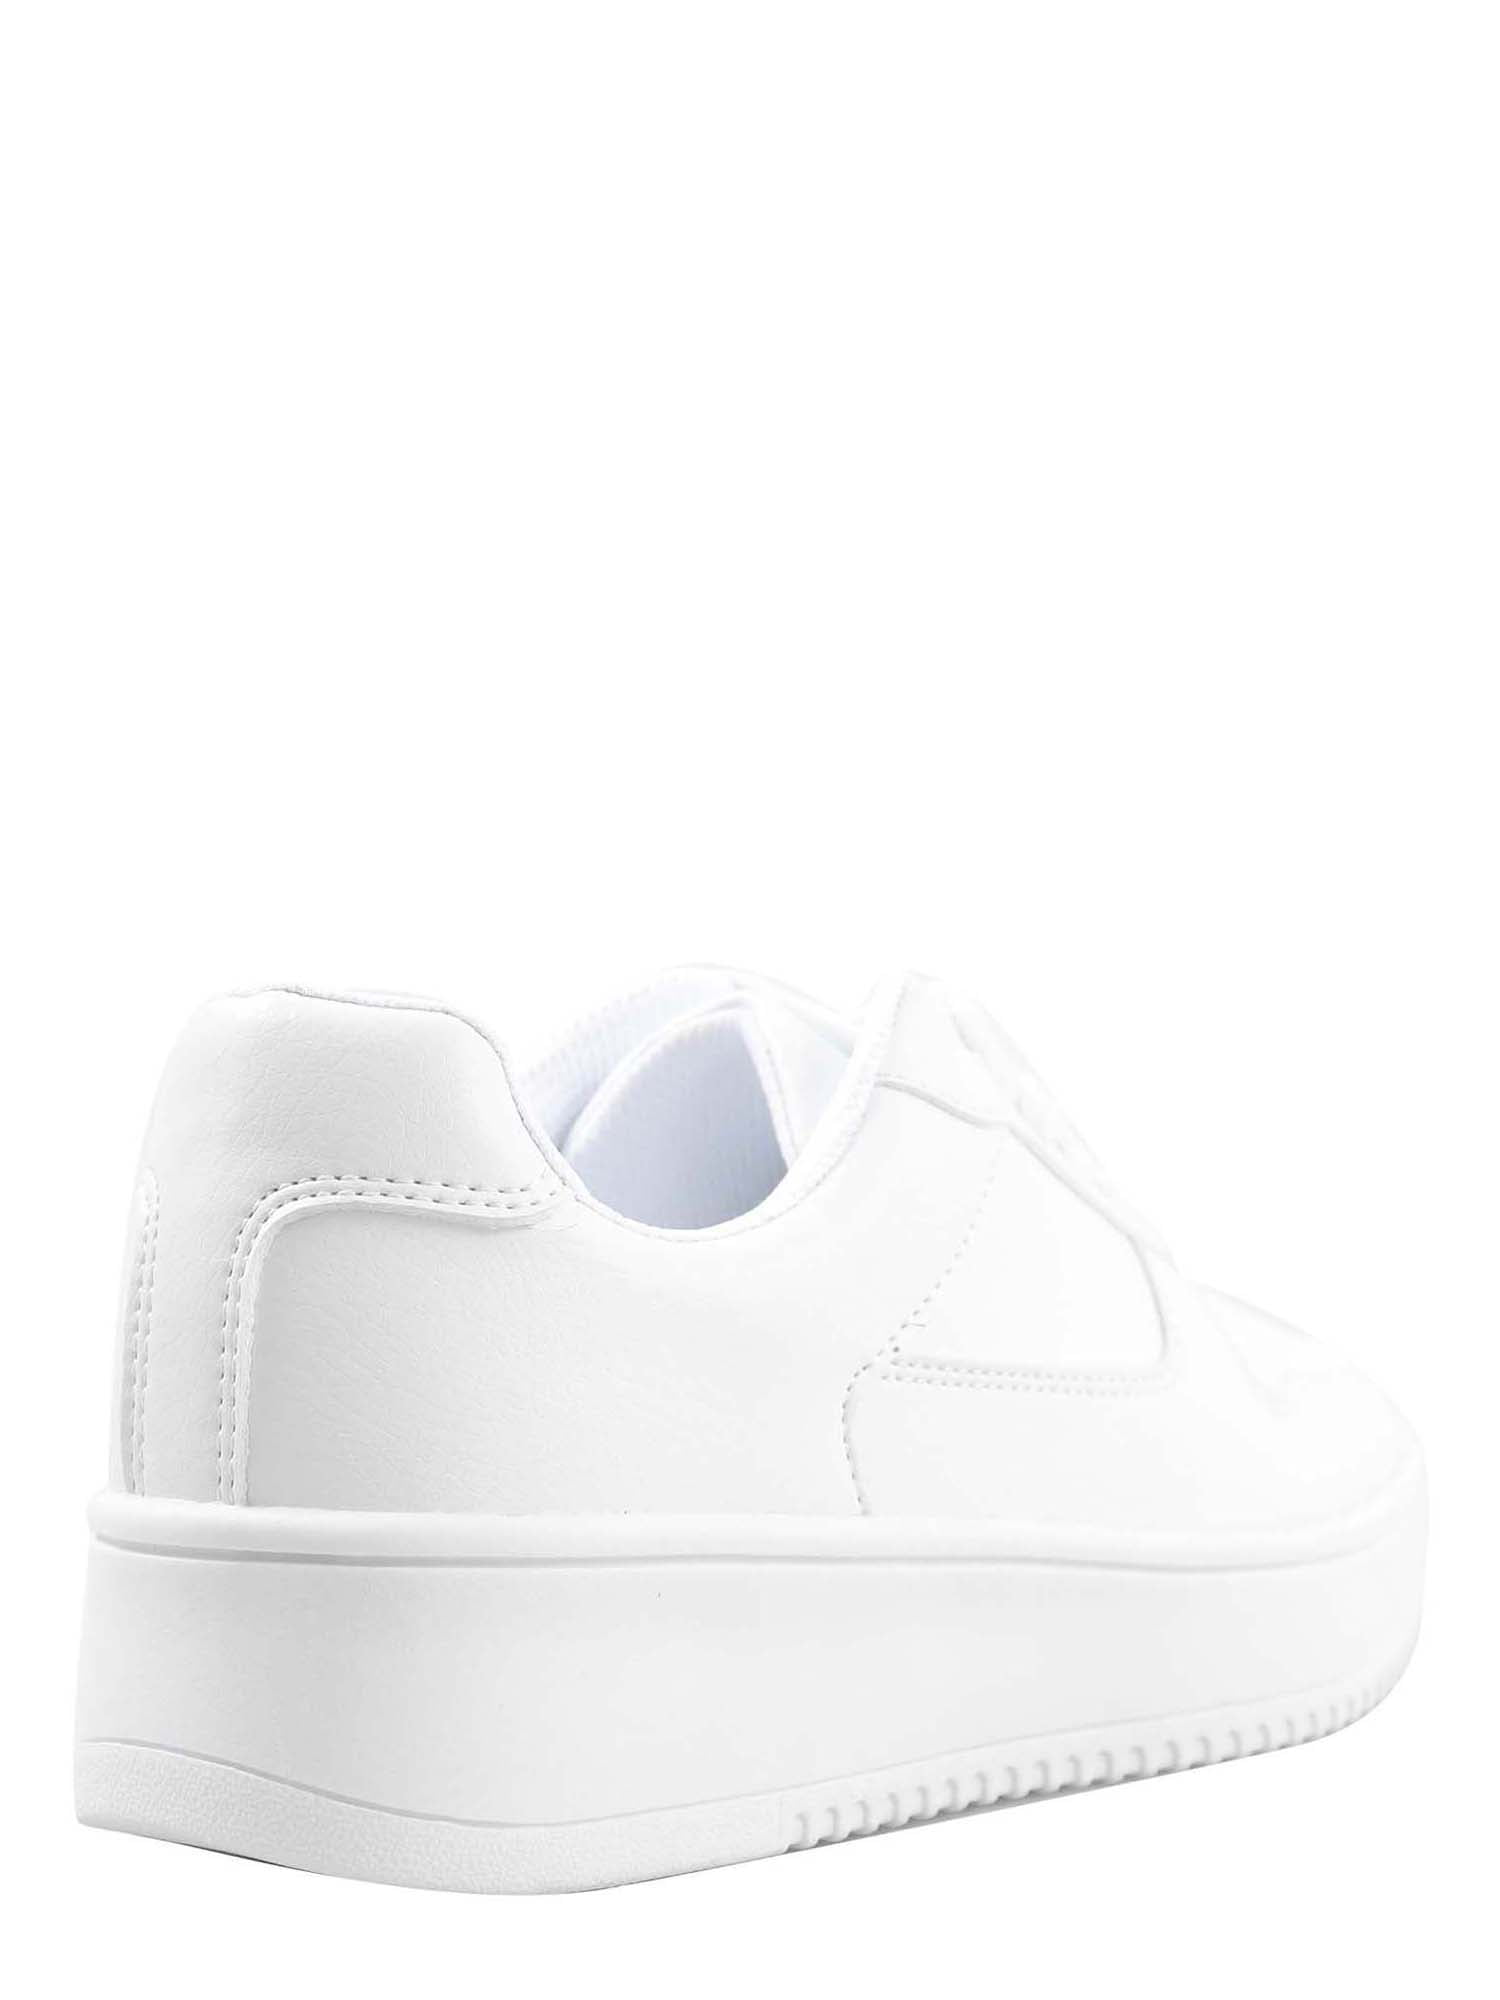 plain white platform sneakers